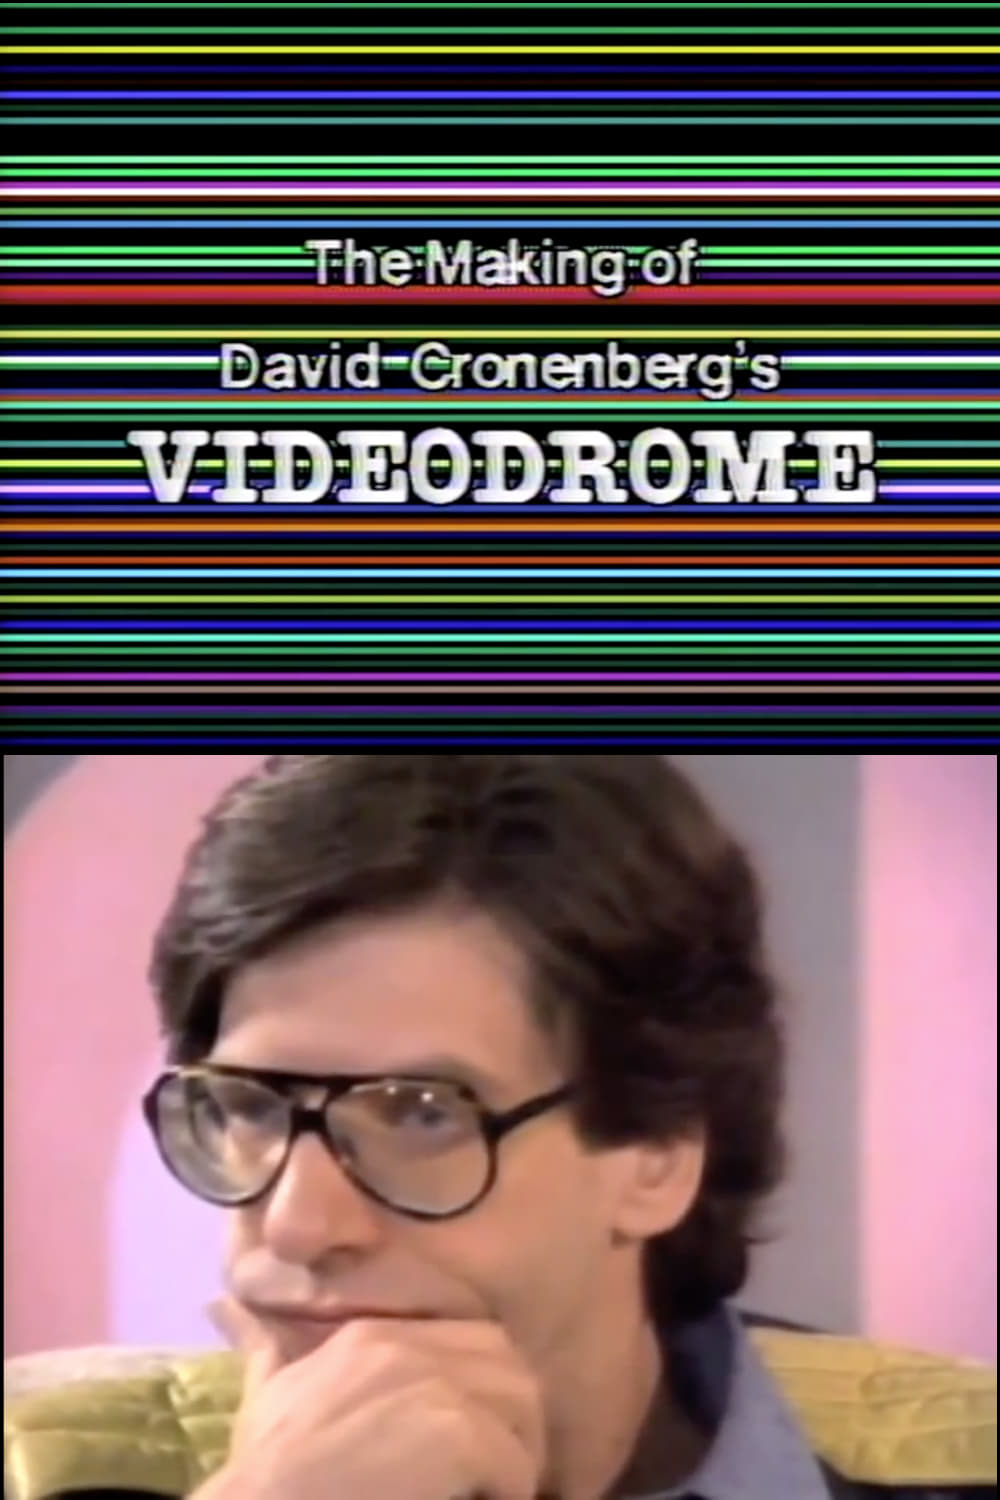 The Making of David Cronenberg's Videodrome (1982)